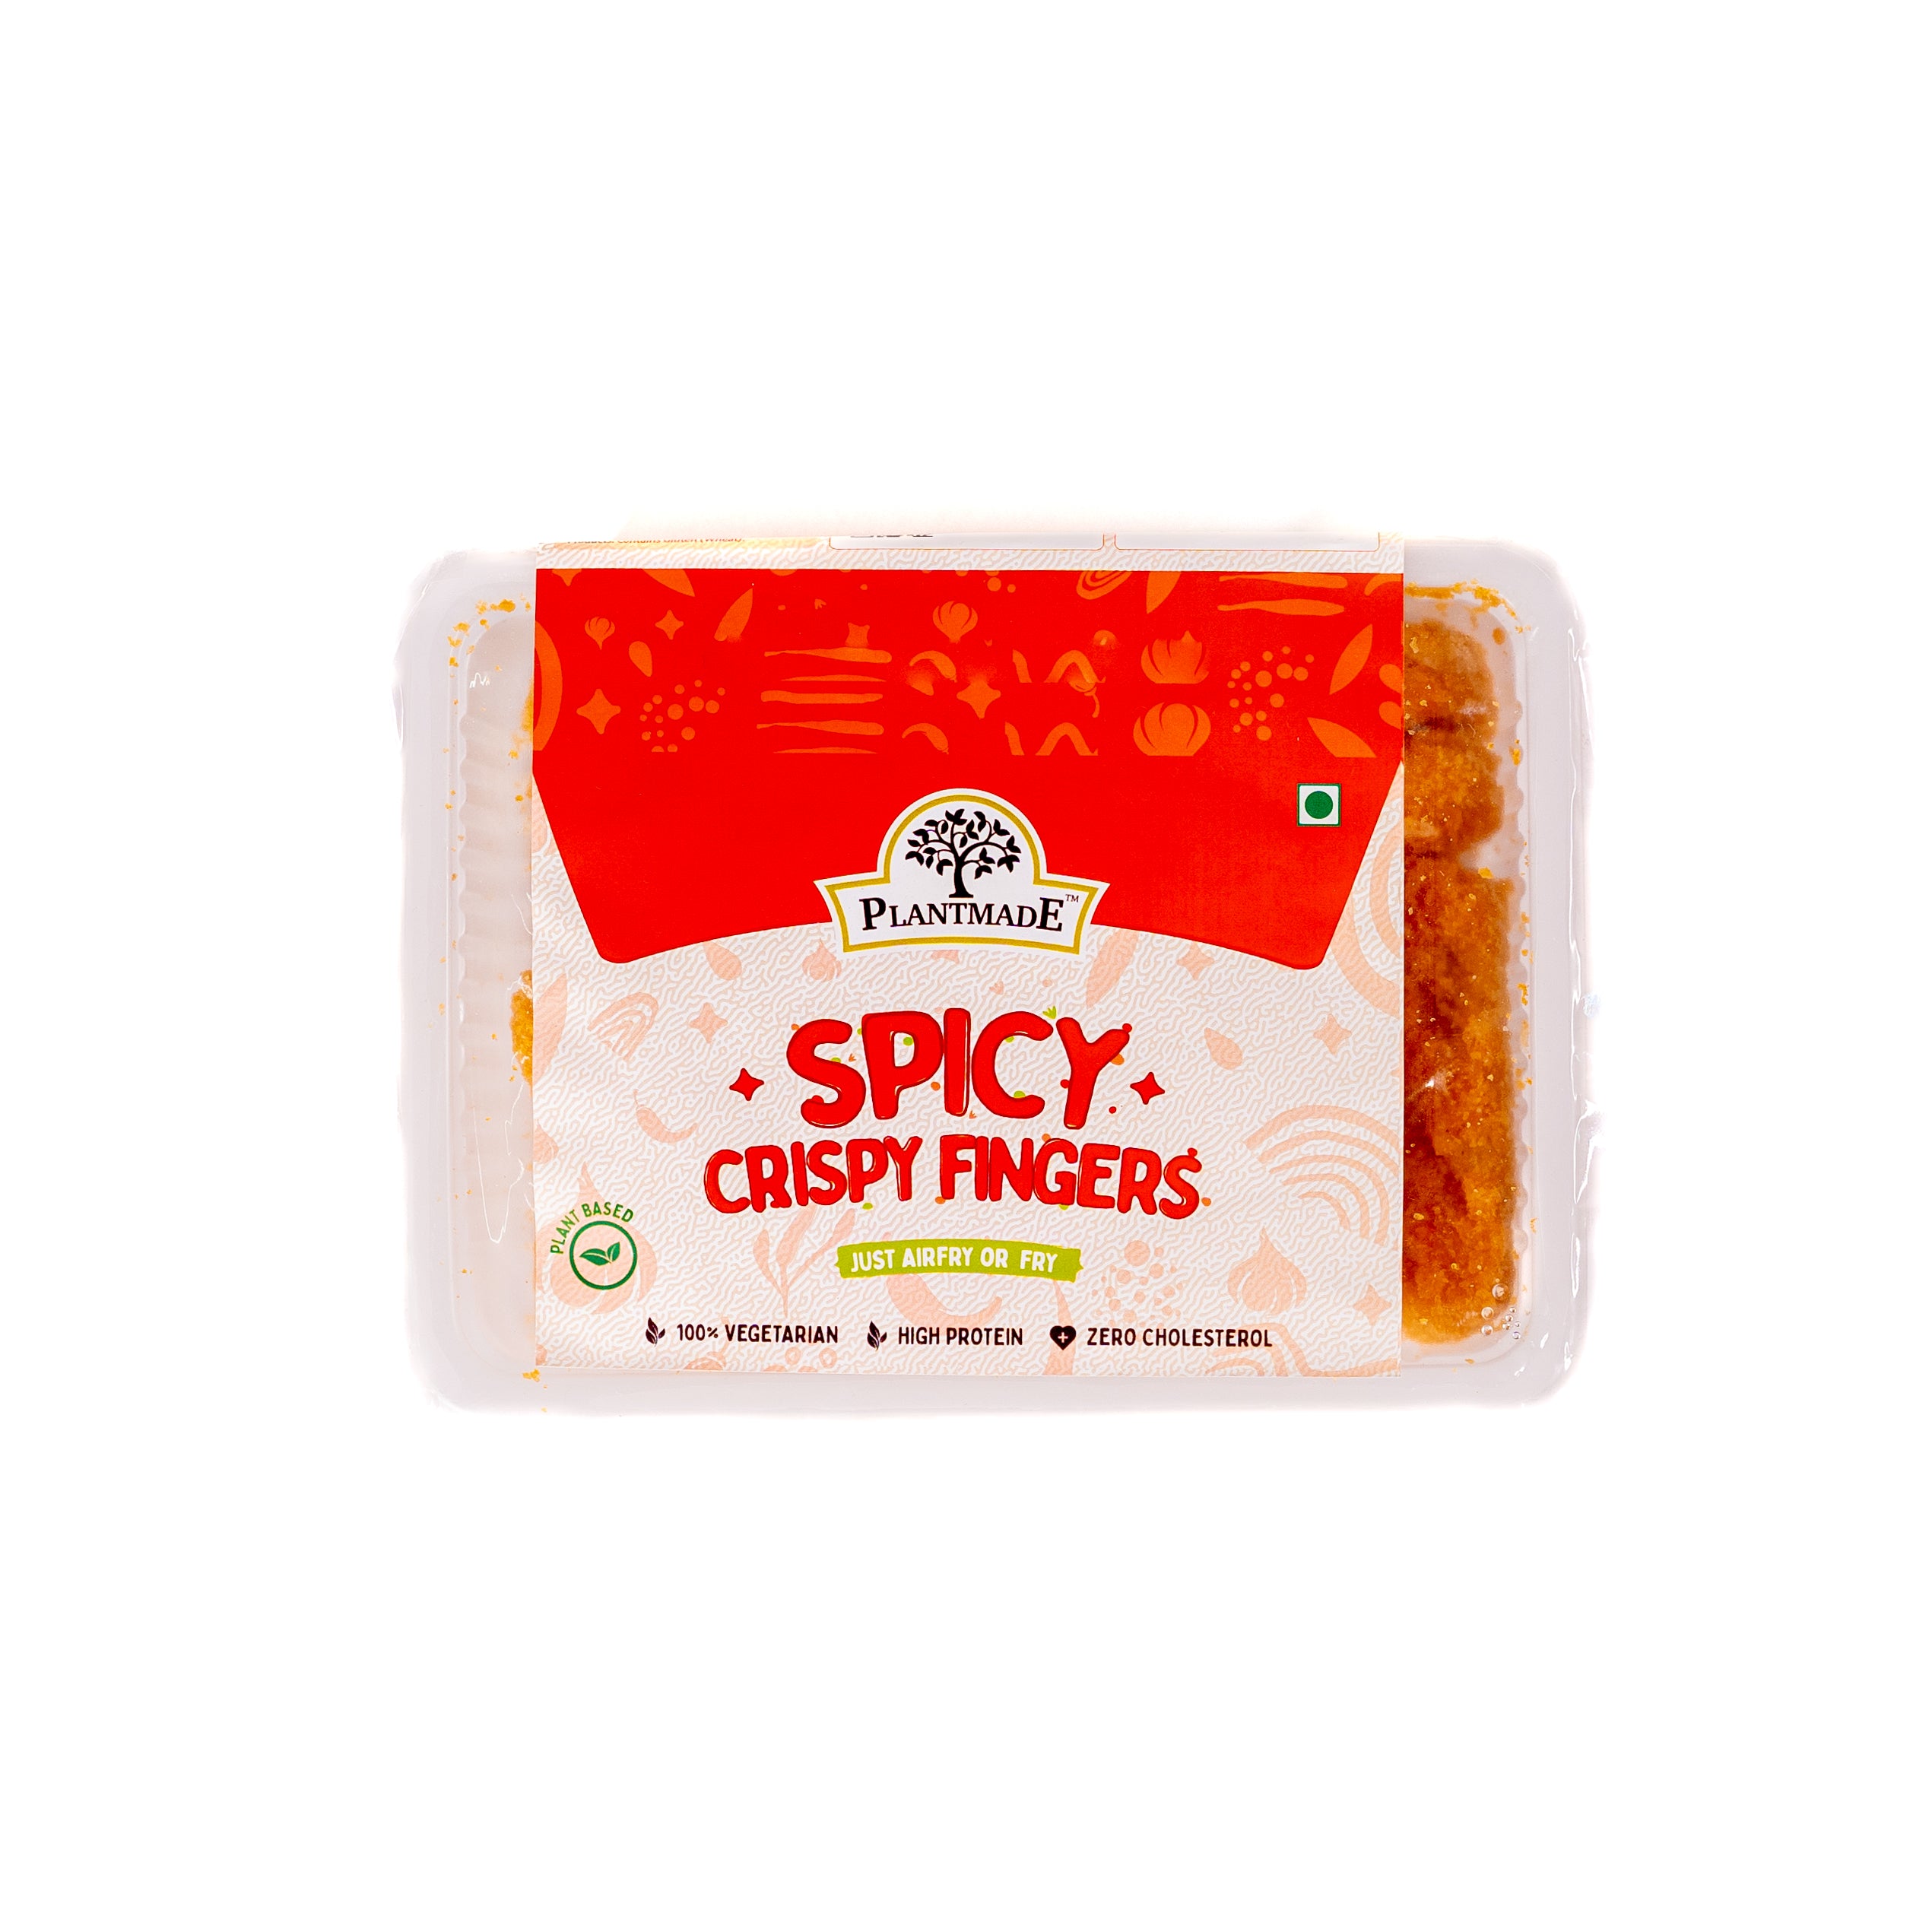 PlantMade Spicy Crispy fingers